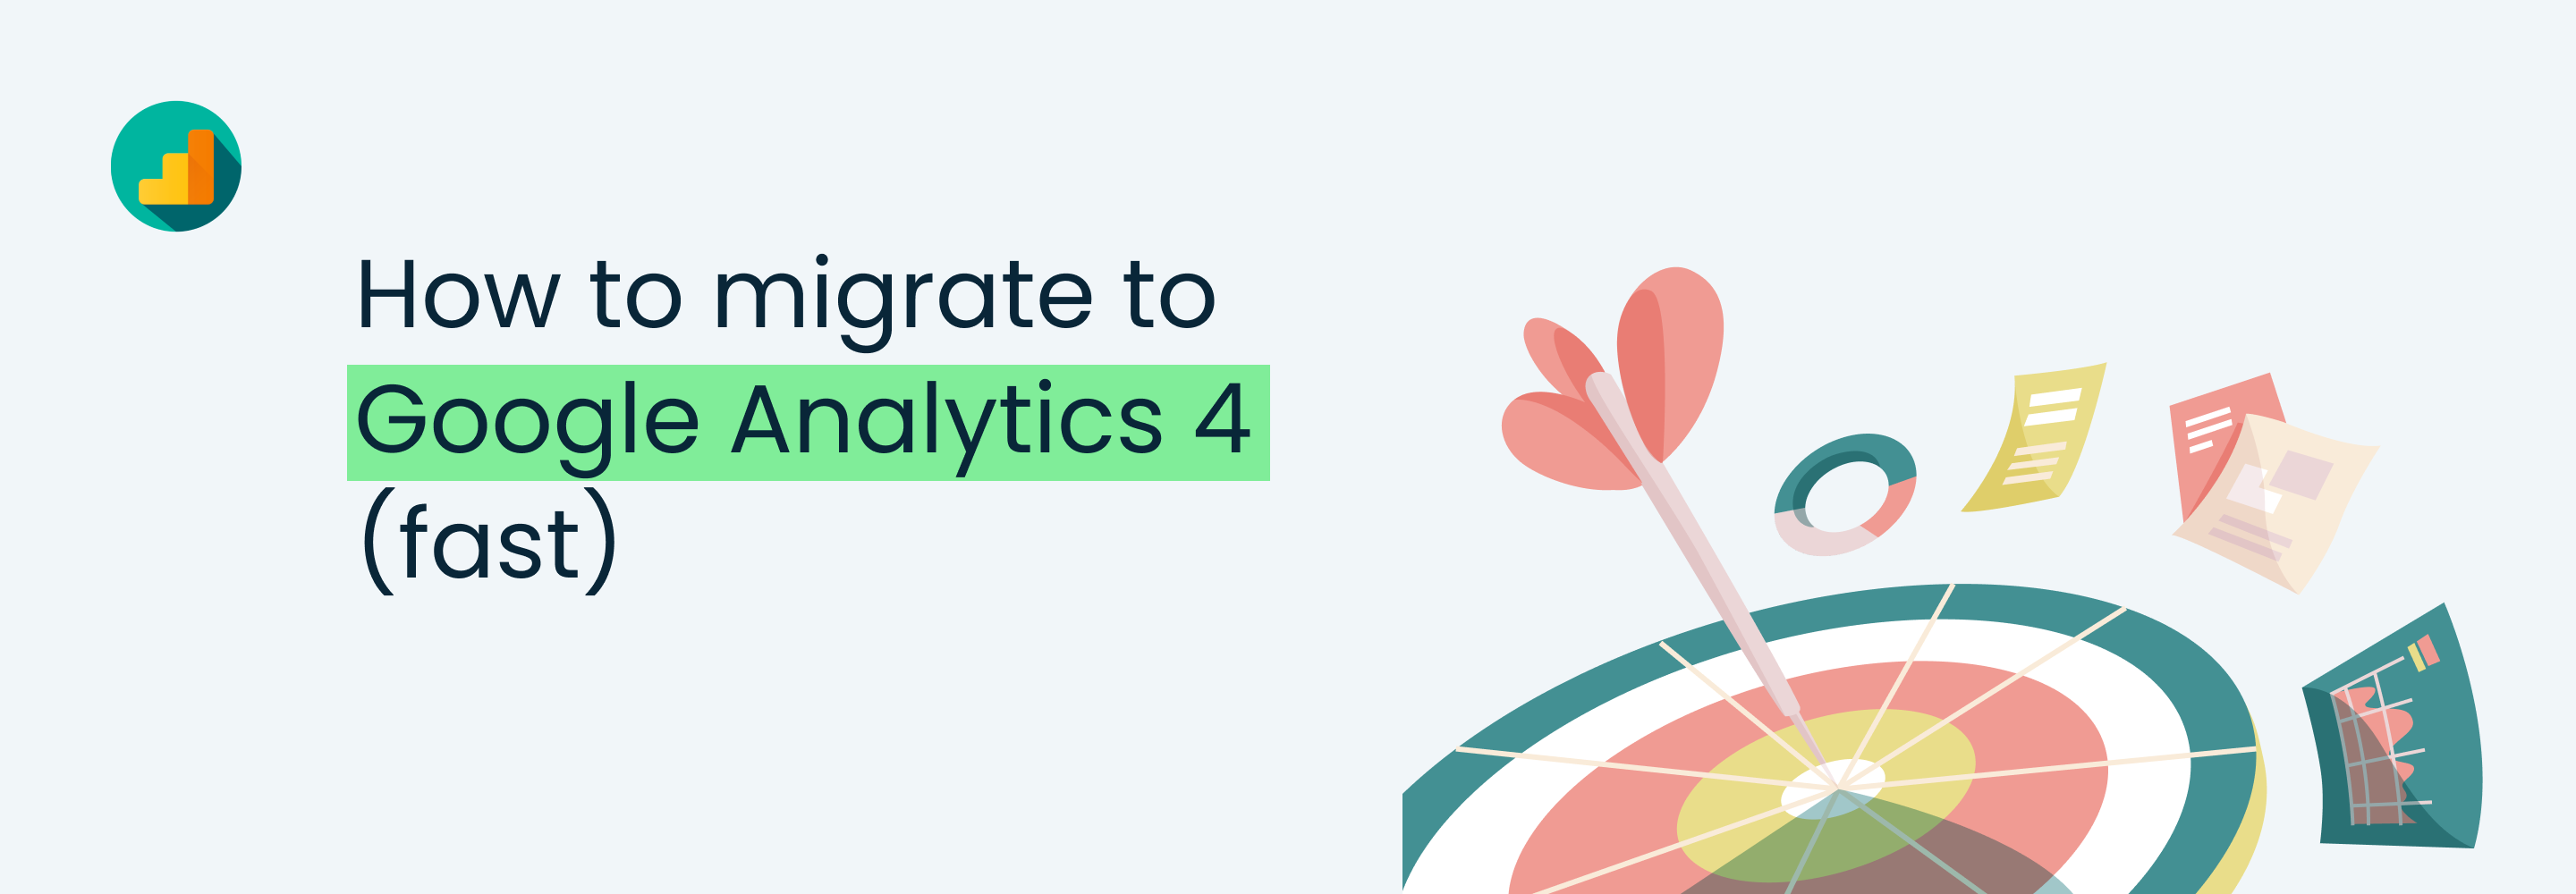 Google Analytics 4 Fast Track migration